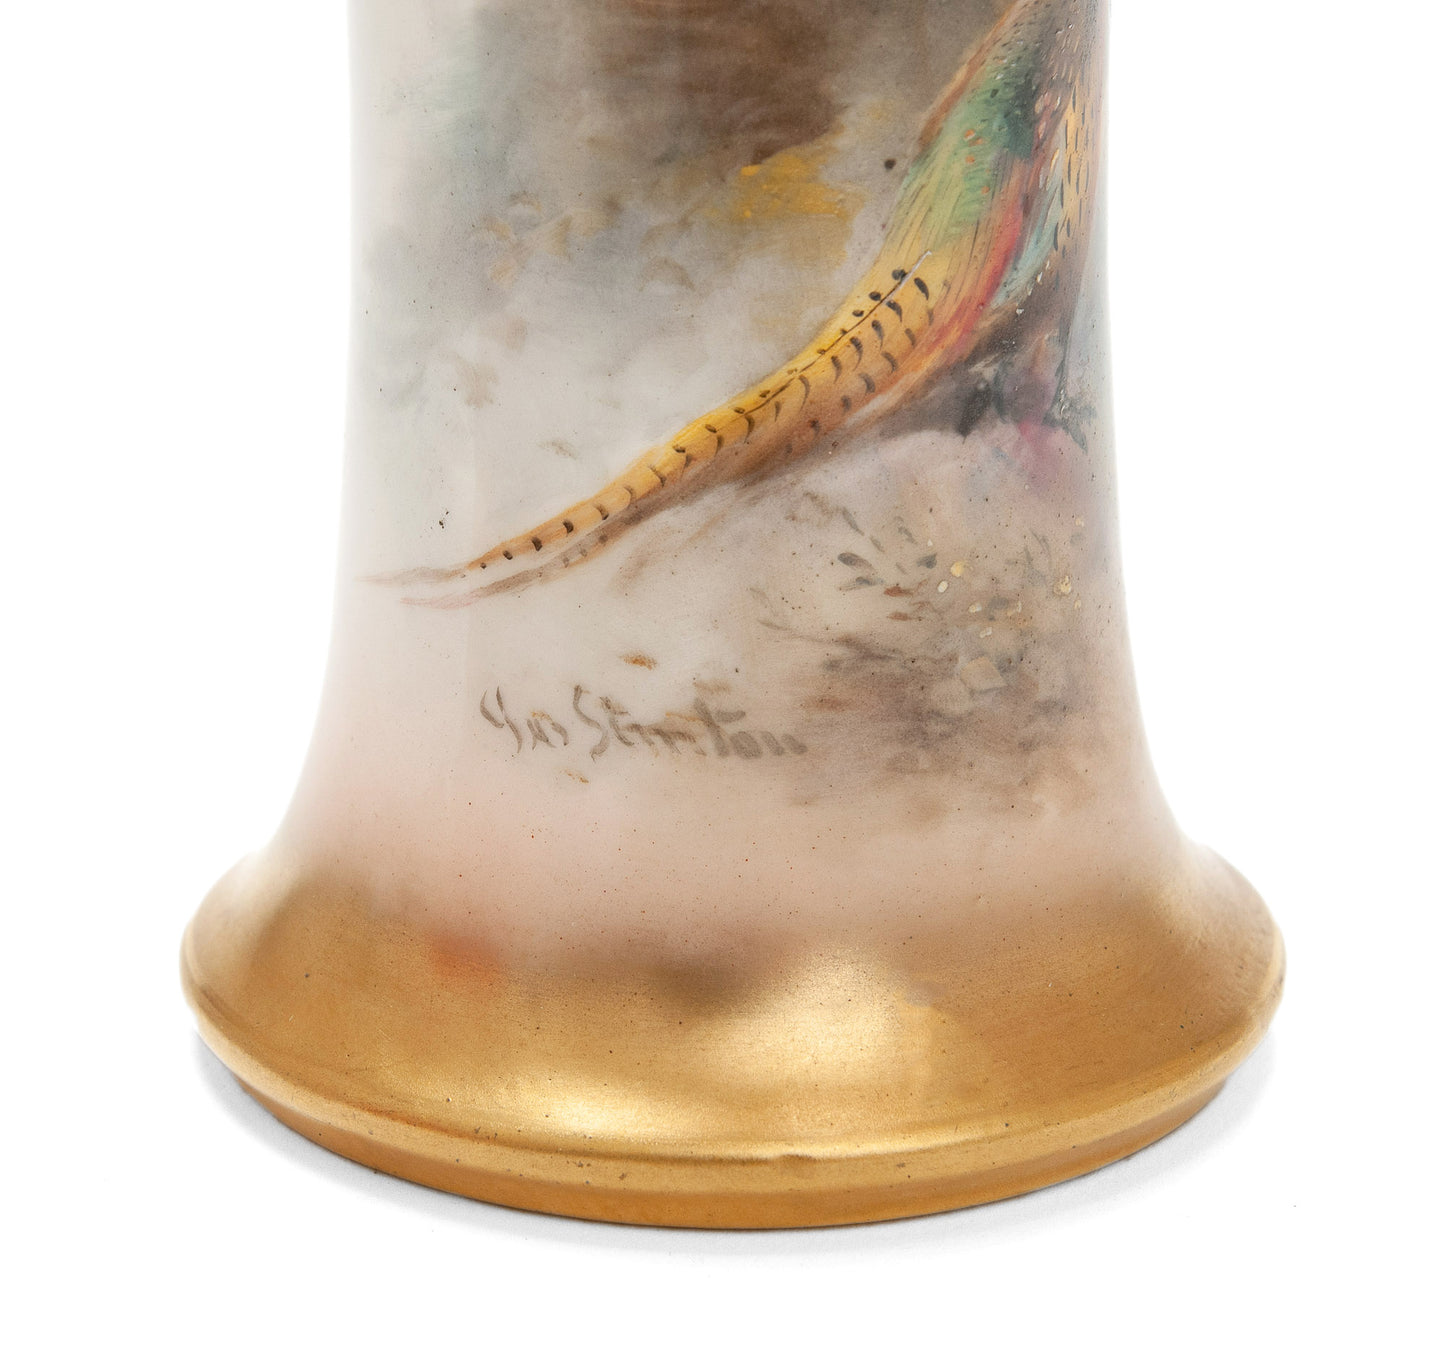 Royal Worcester China James Stinton Woodland Pheasants Hand Painted Vase 1934 (Code 2100)